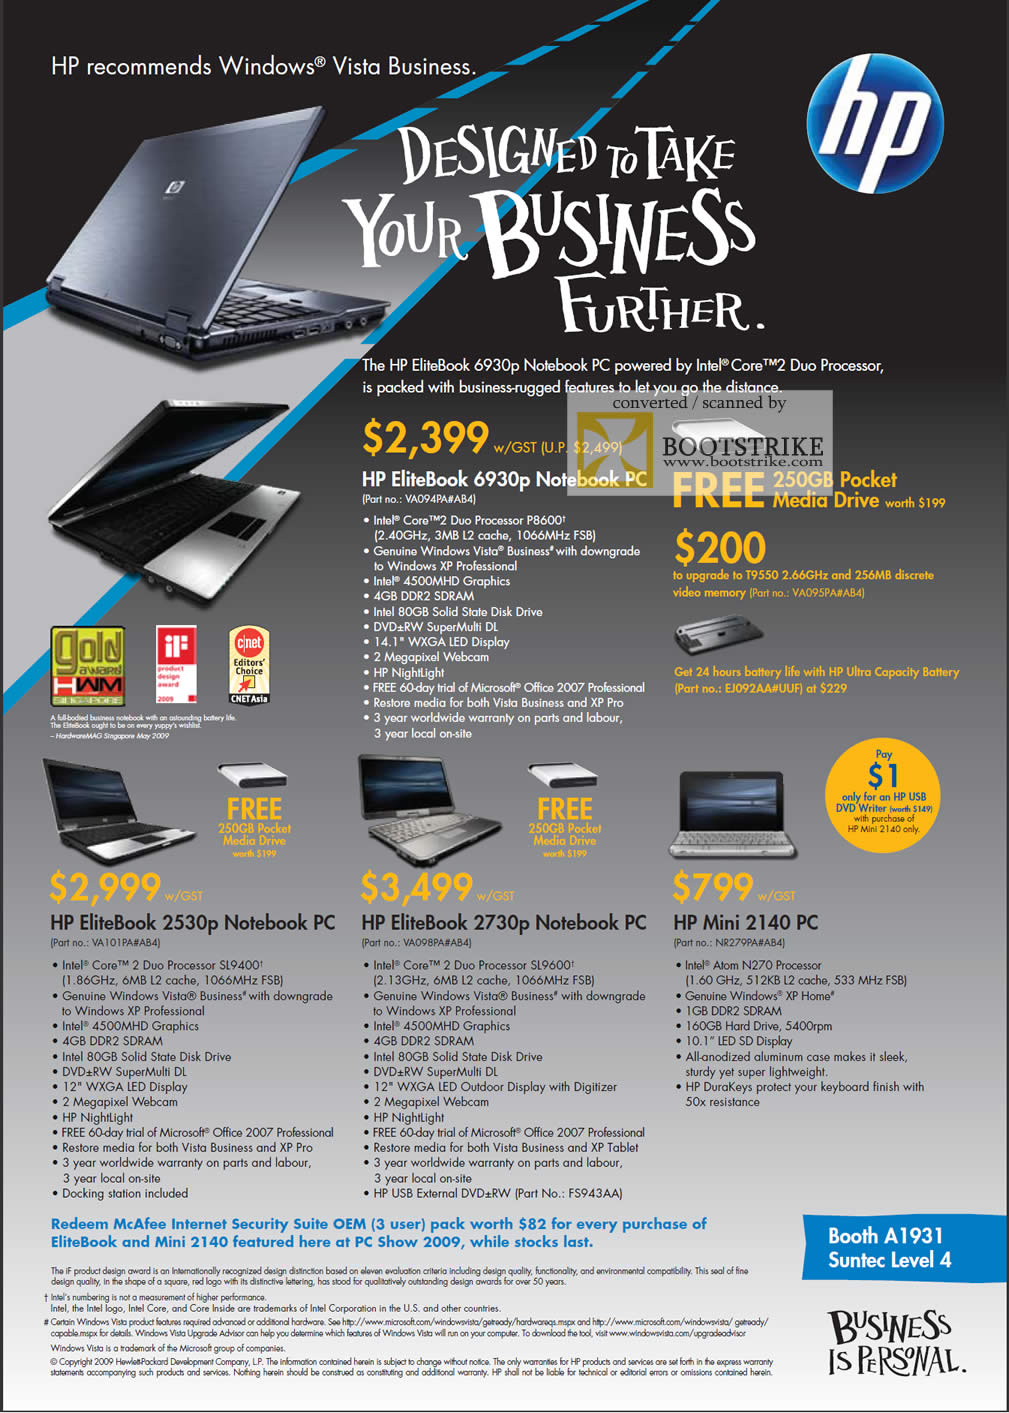 PC Show 2009 price list image brochure of HP Elitebook 6930p 2530p 2730p 2140